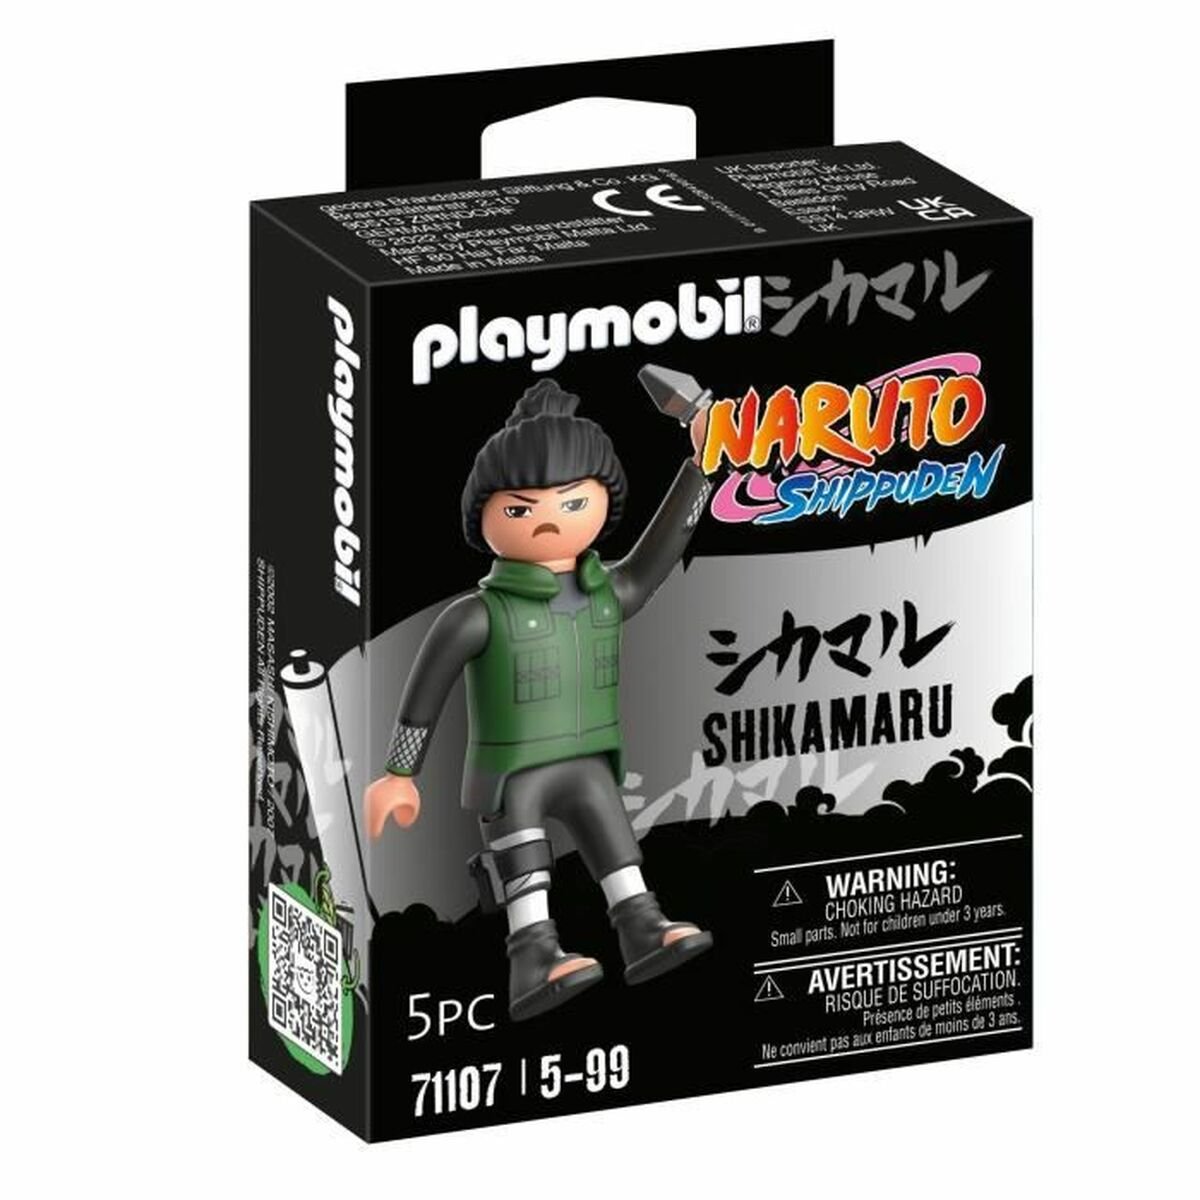 Zdjęcia - Figurka / zabawka transformująca Playmobil Figure  Naruto Shippuden - Shikamaru 71107 5 Pieces  (S7190810)